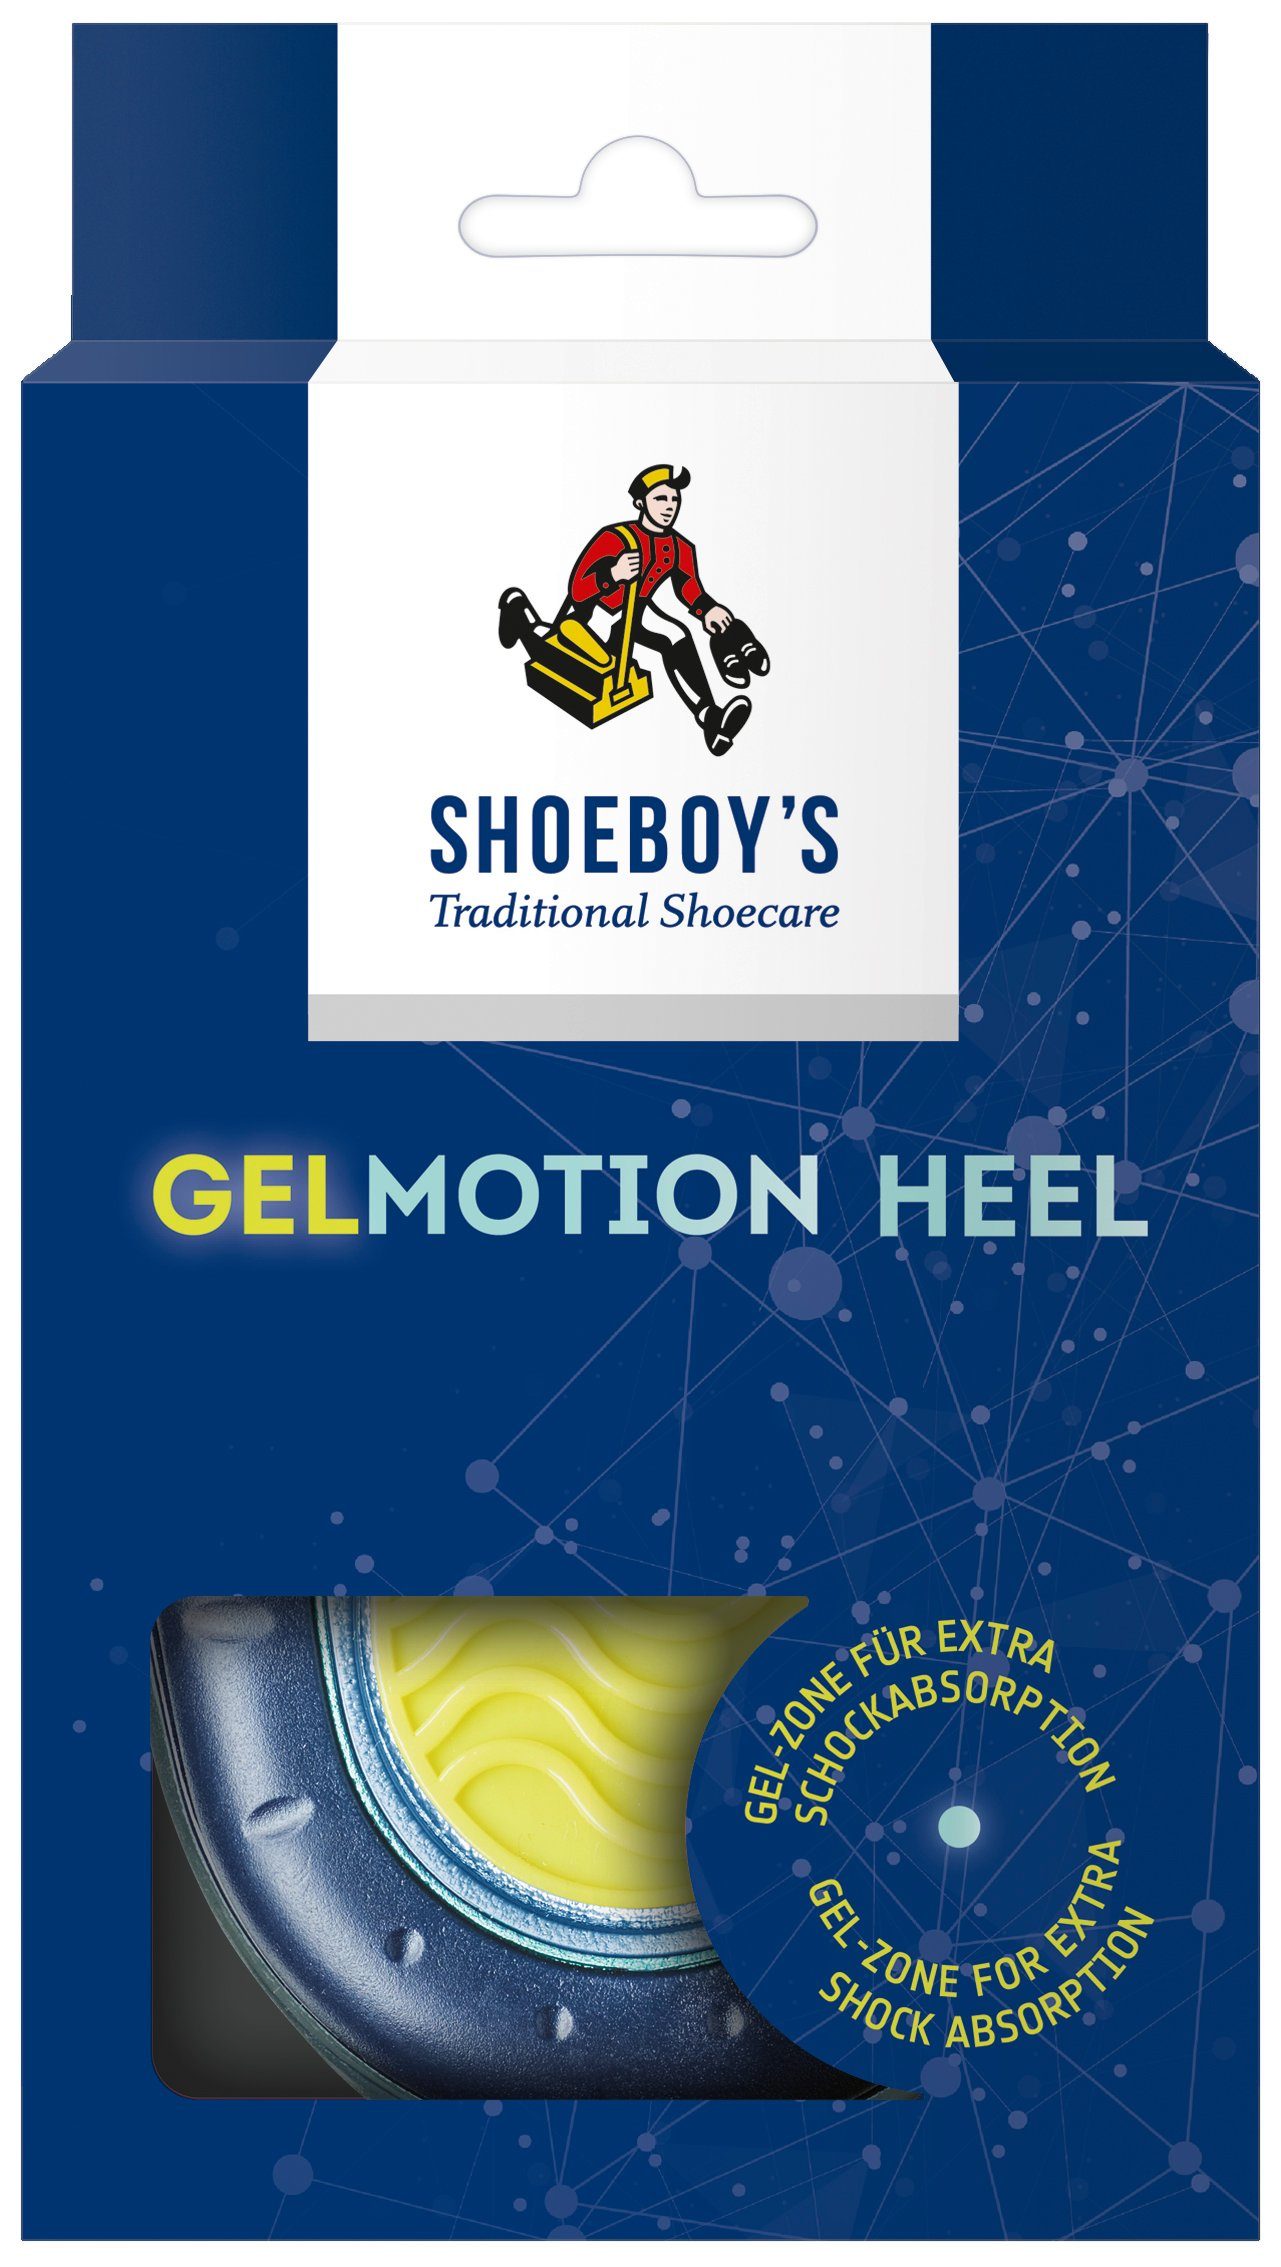 Gel-Fersenkissen Heel GelMotion Shoeboys Gelpolster -